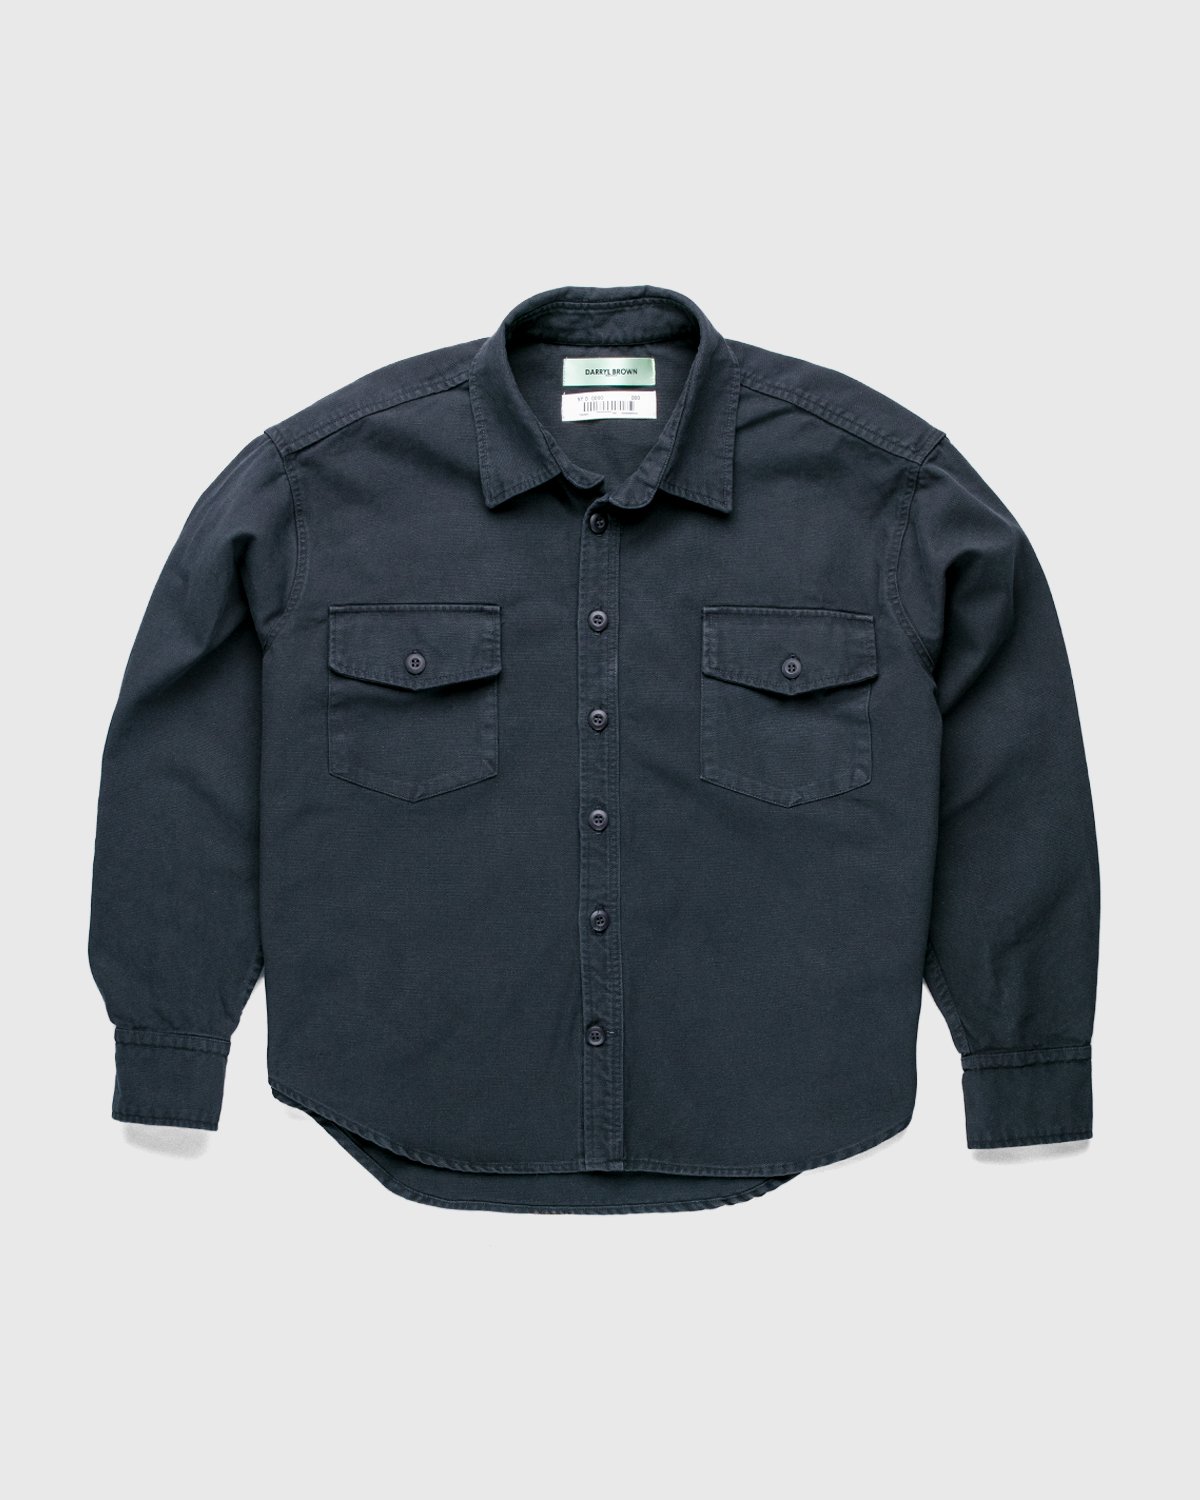 Darryl Brown - Military Work Shirt Vintage Black - Clothing - Black - Image 1